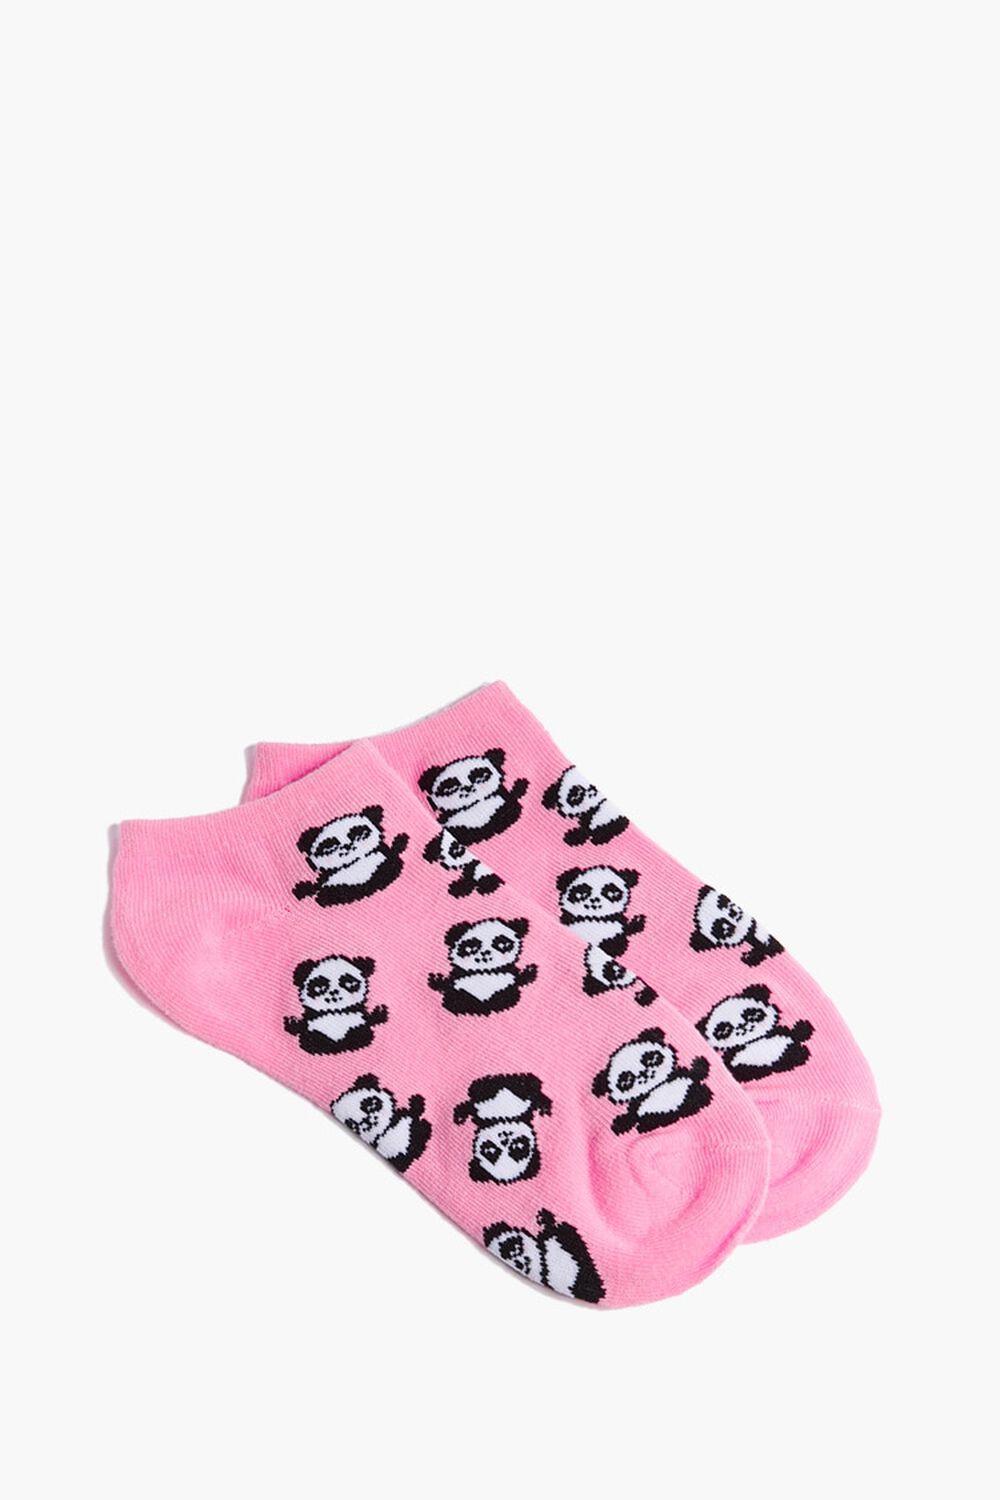 PINK/MULTI Panda Print Ankle Socks, image 2